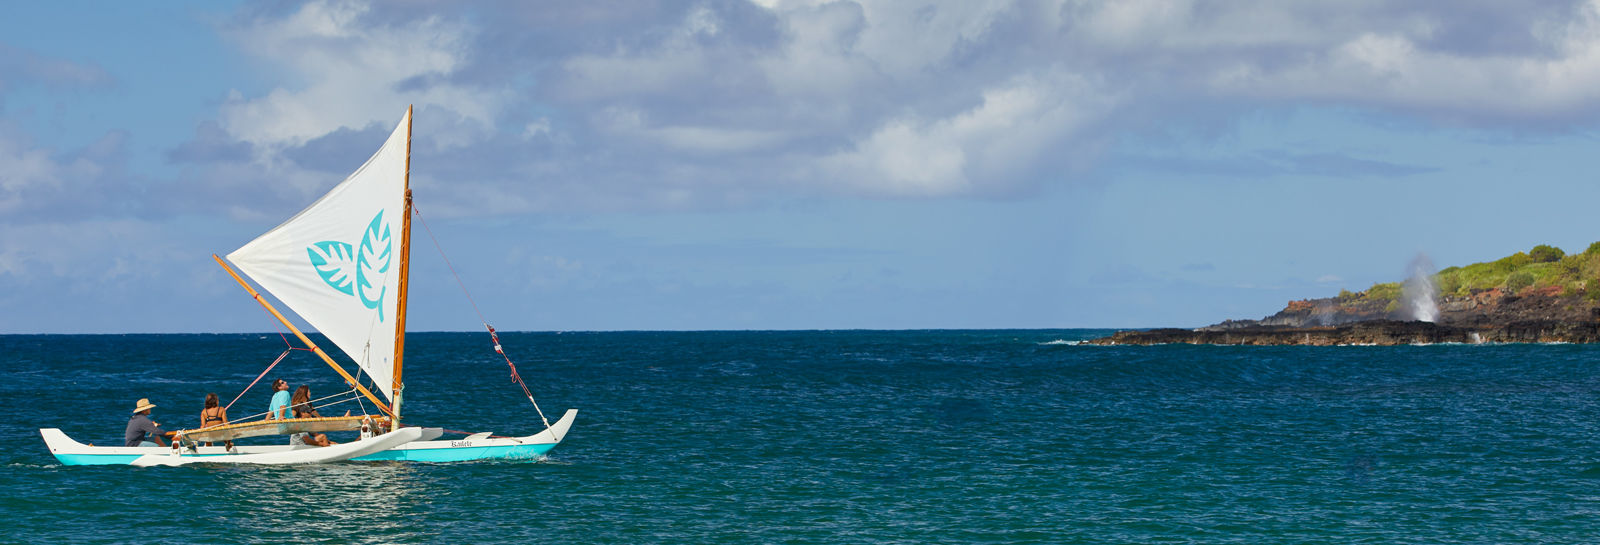 kauai resort sailing canoe